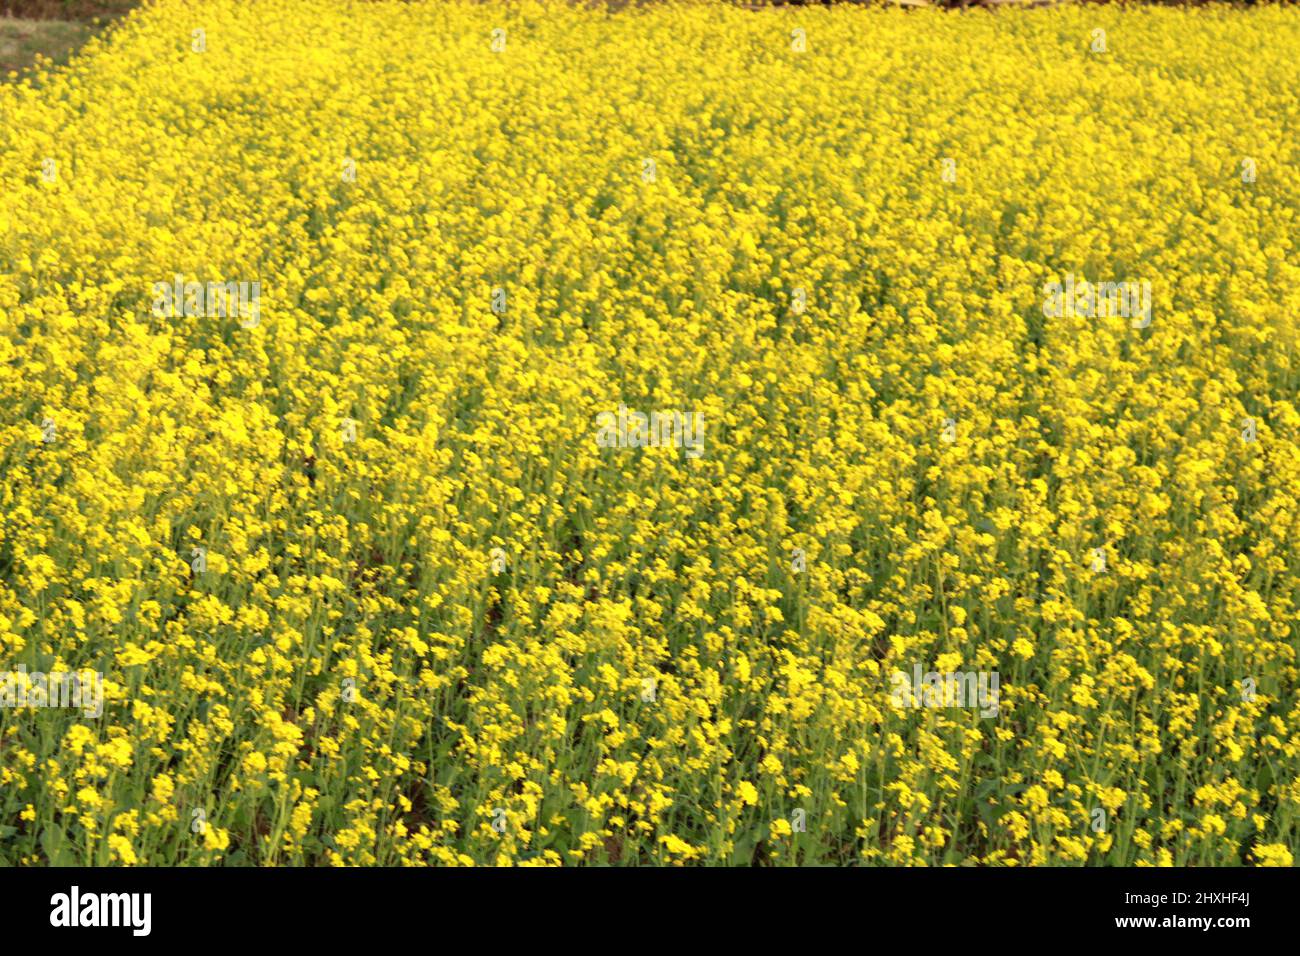 Mustard plant flower Stock Photo